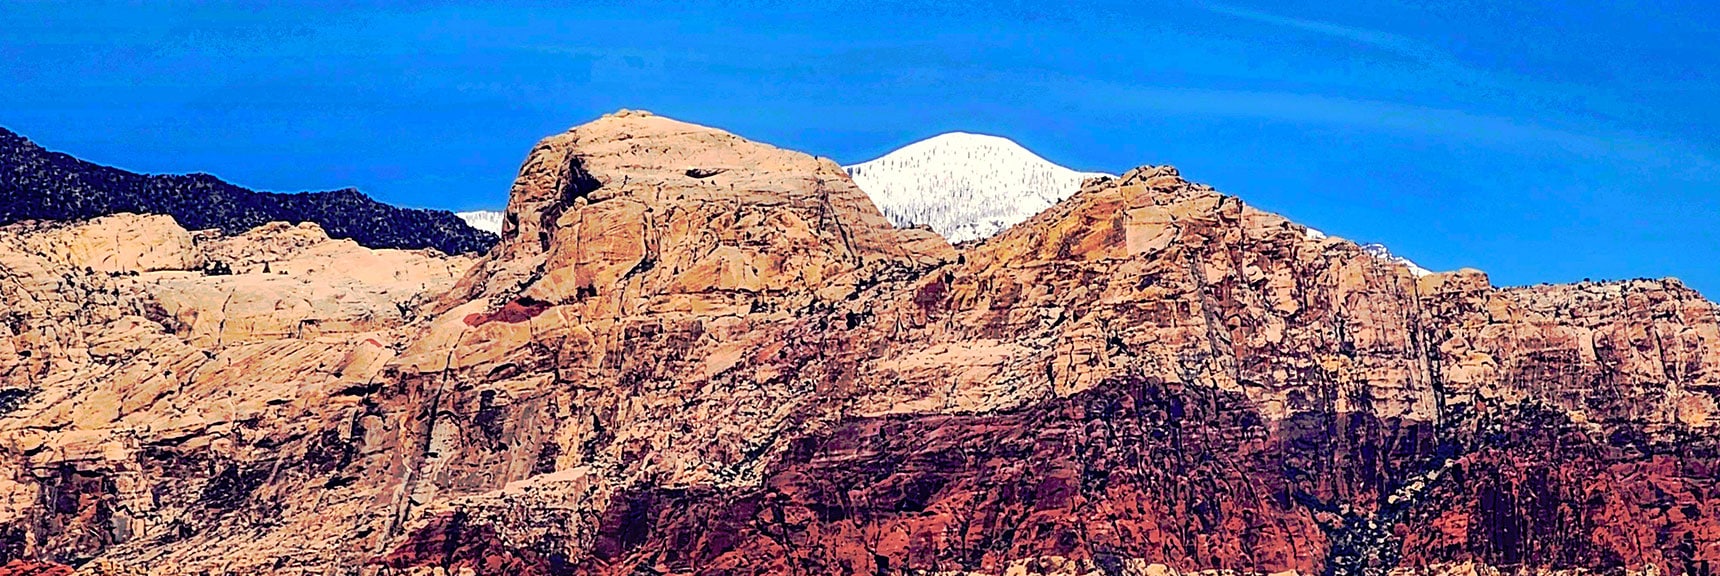 Griffith Peak Seen Between Bridge Mt. & Bridge Point. | Blue Diamond Hill Southern Ridgelines | Red Rock Canyon, Nevada